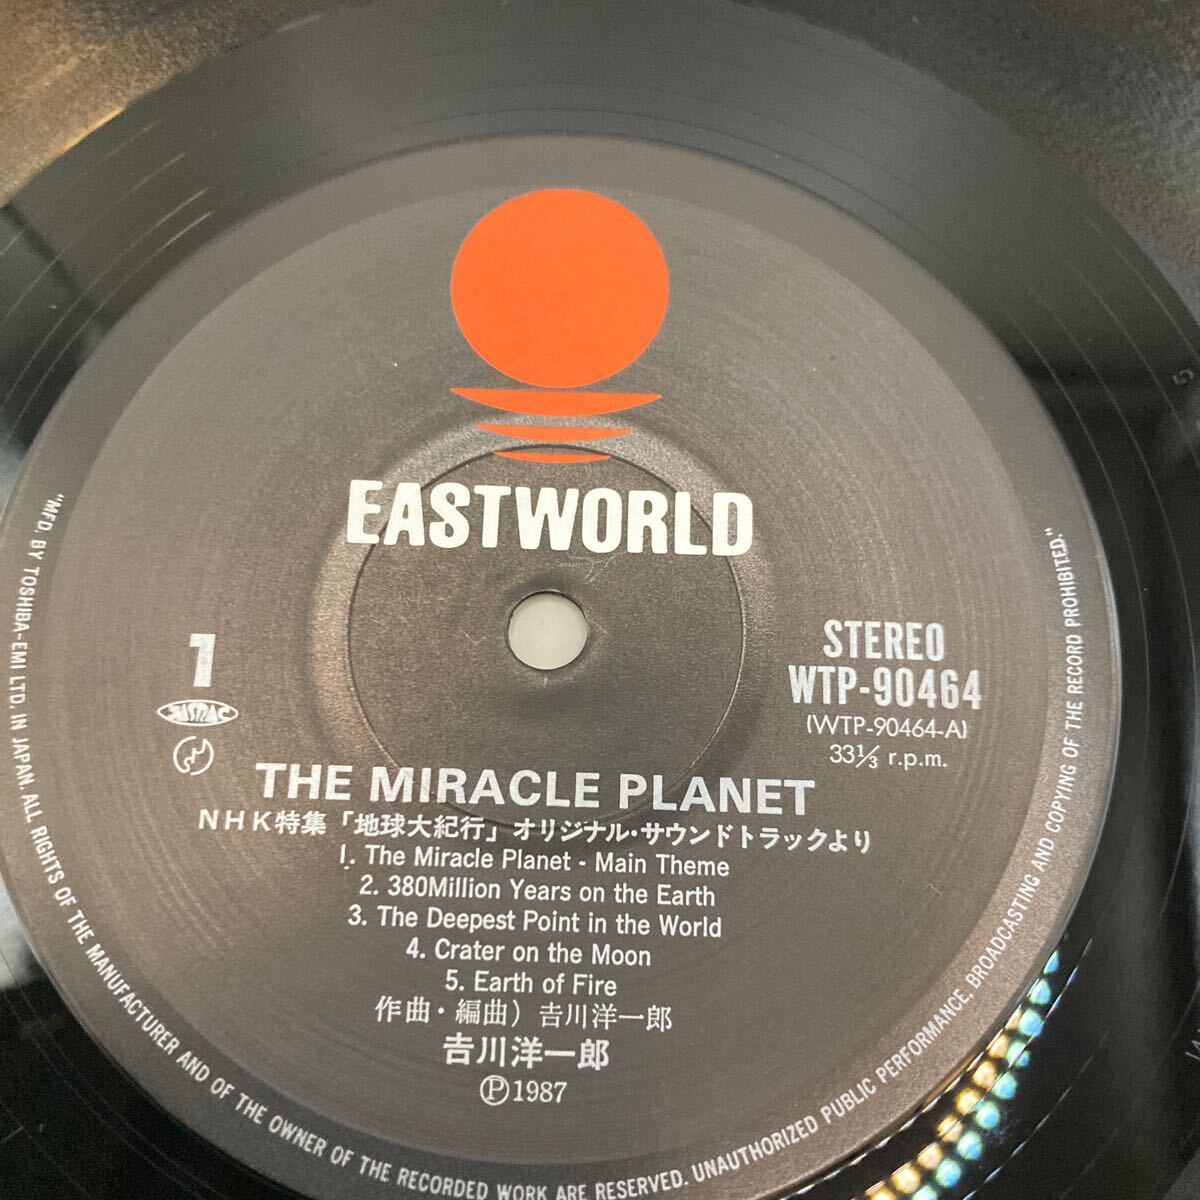 極美盤 LP 吉川洋一郎「The Miracle Planet(NHK特集 地球大紀行)」Eastworld(WTP-90464)の画像5